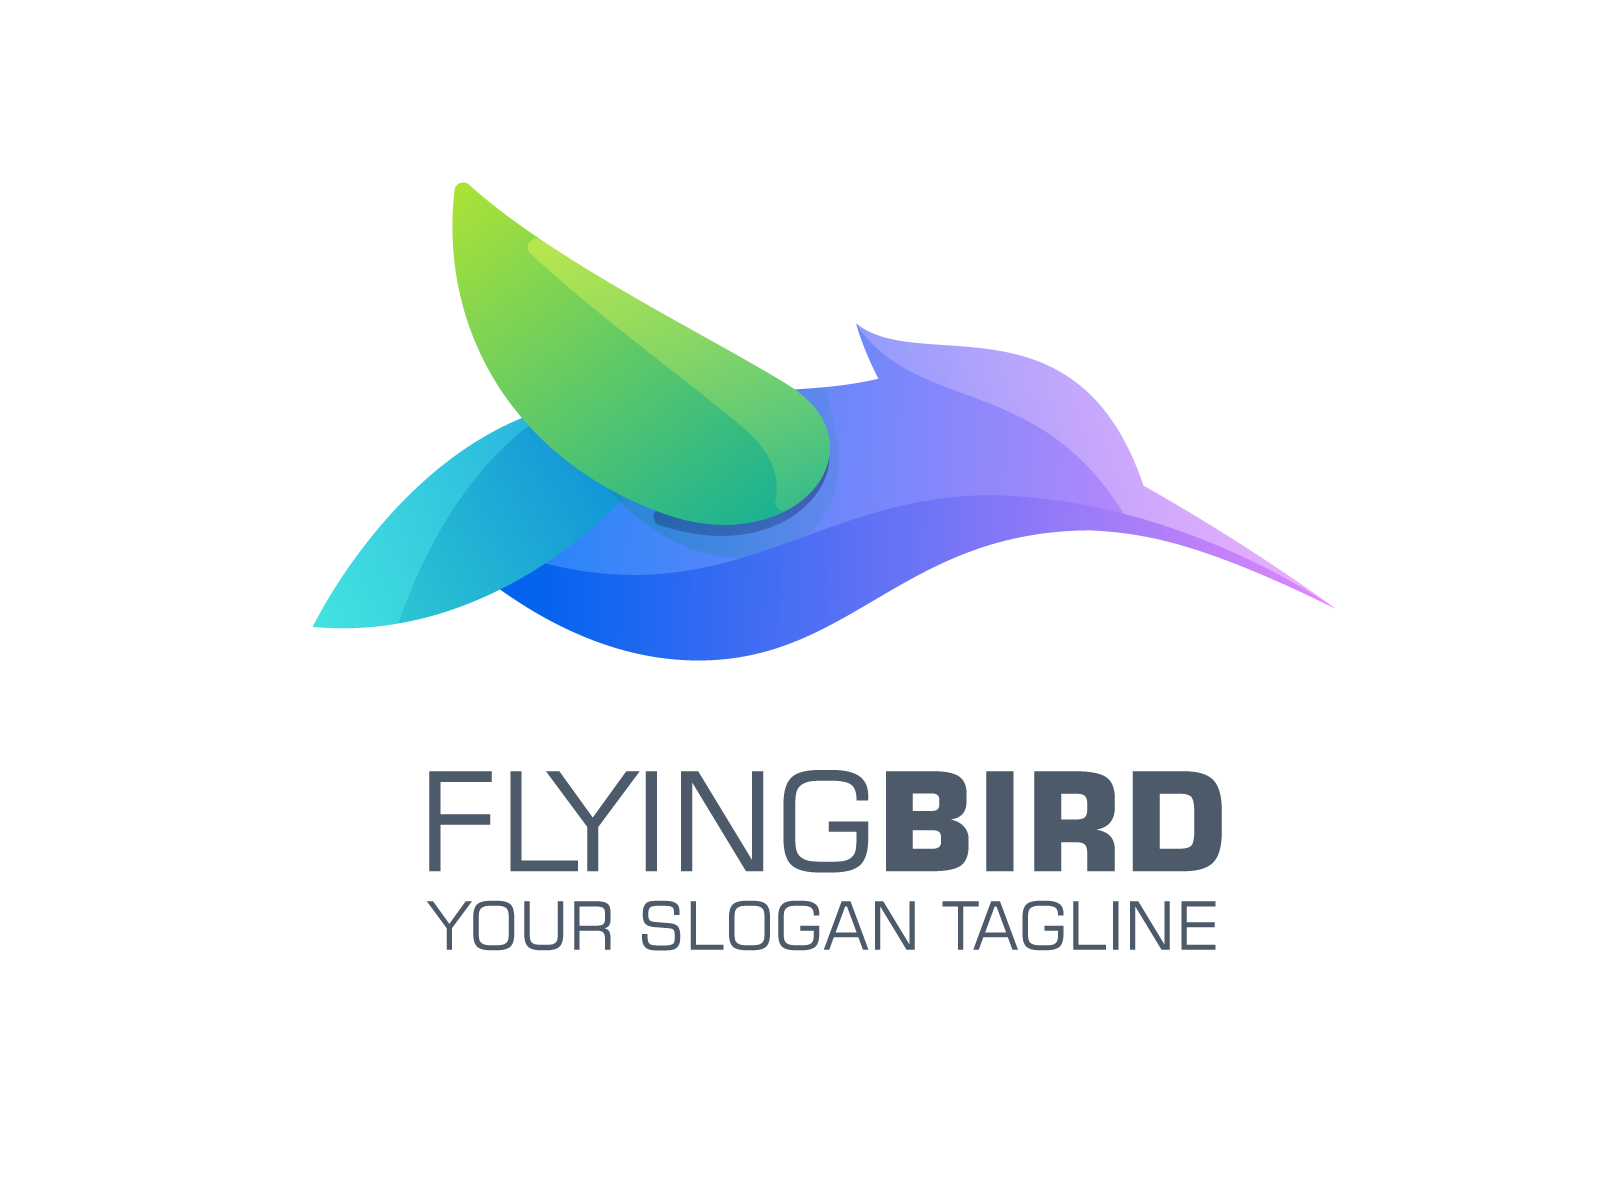 Bird logo, flying bird icon, business concept logo. - Stock Image -  Everypixel